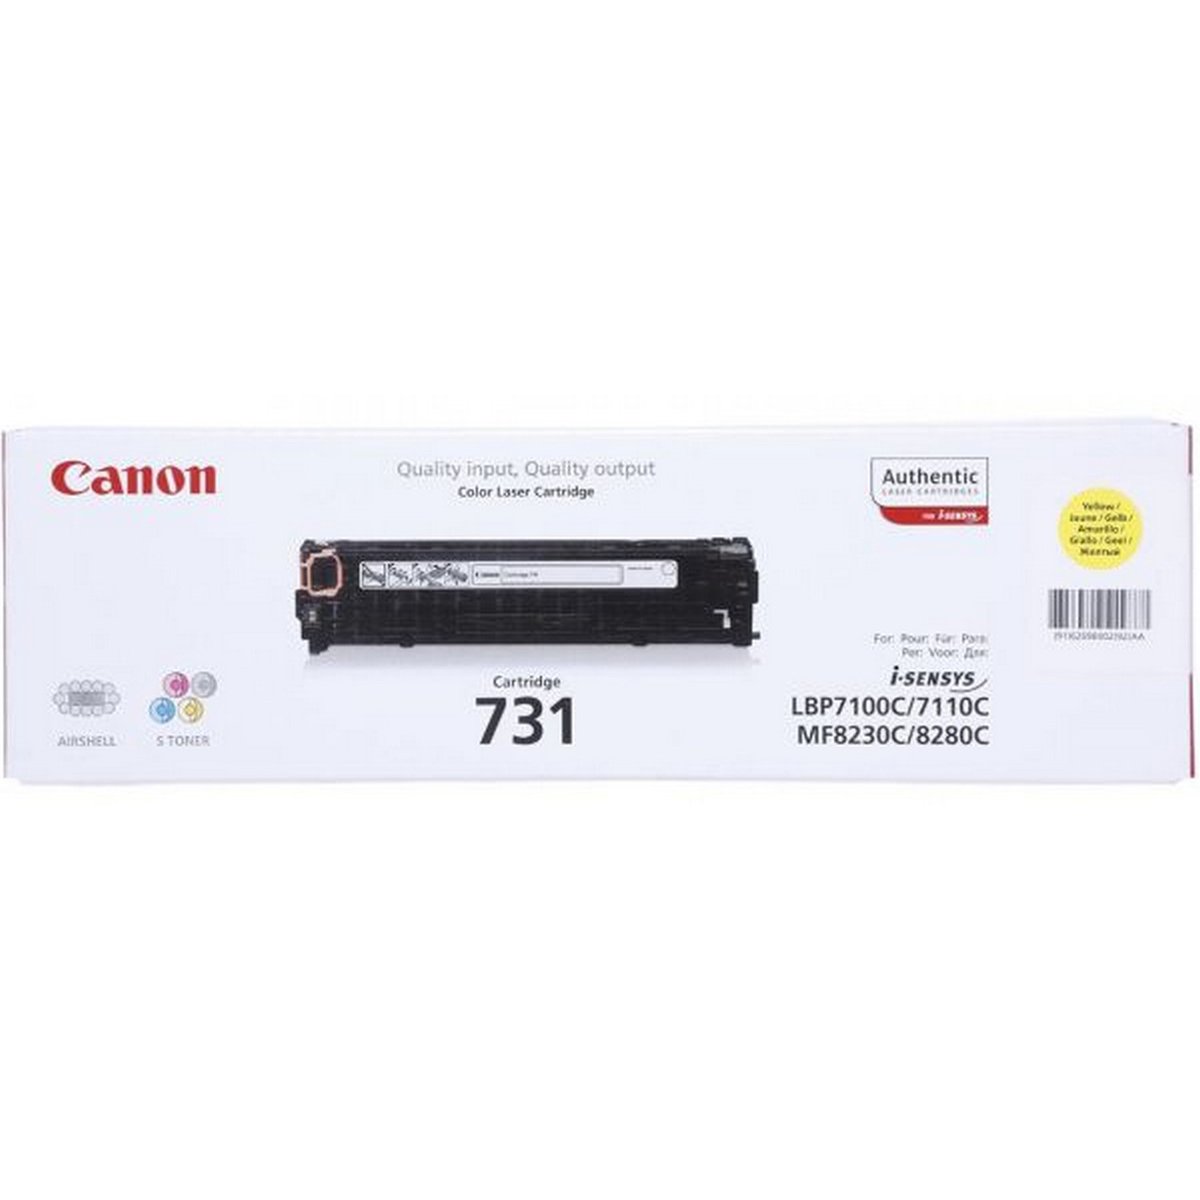 Canon Laser Toner Cartridge 731 Yellow